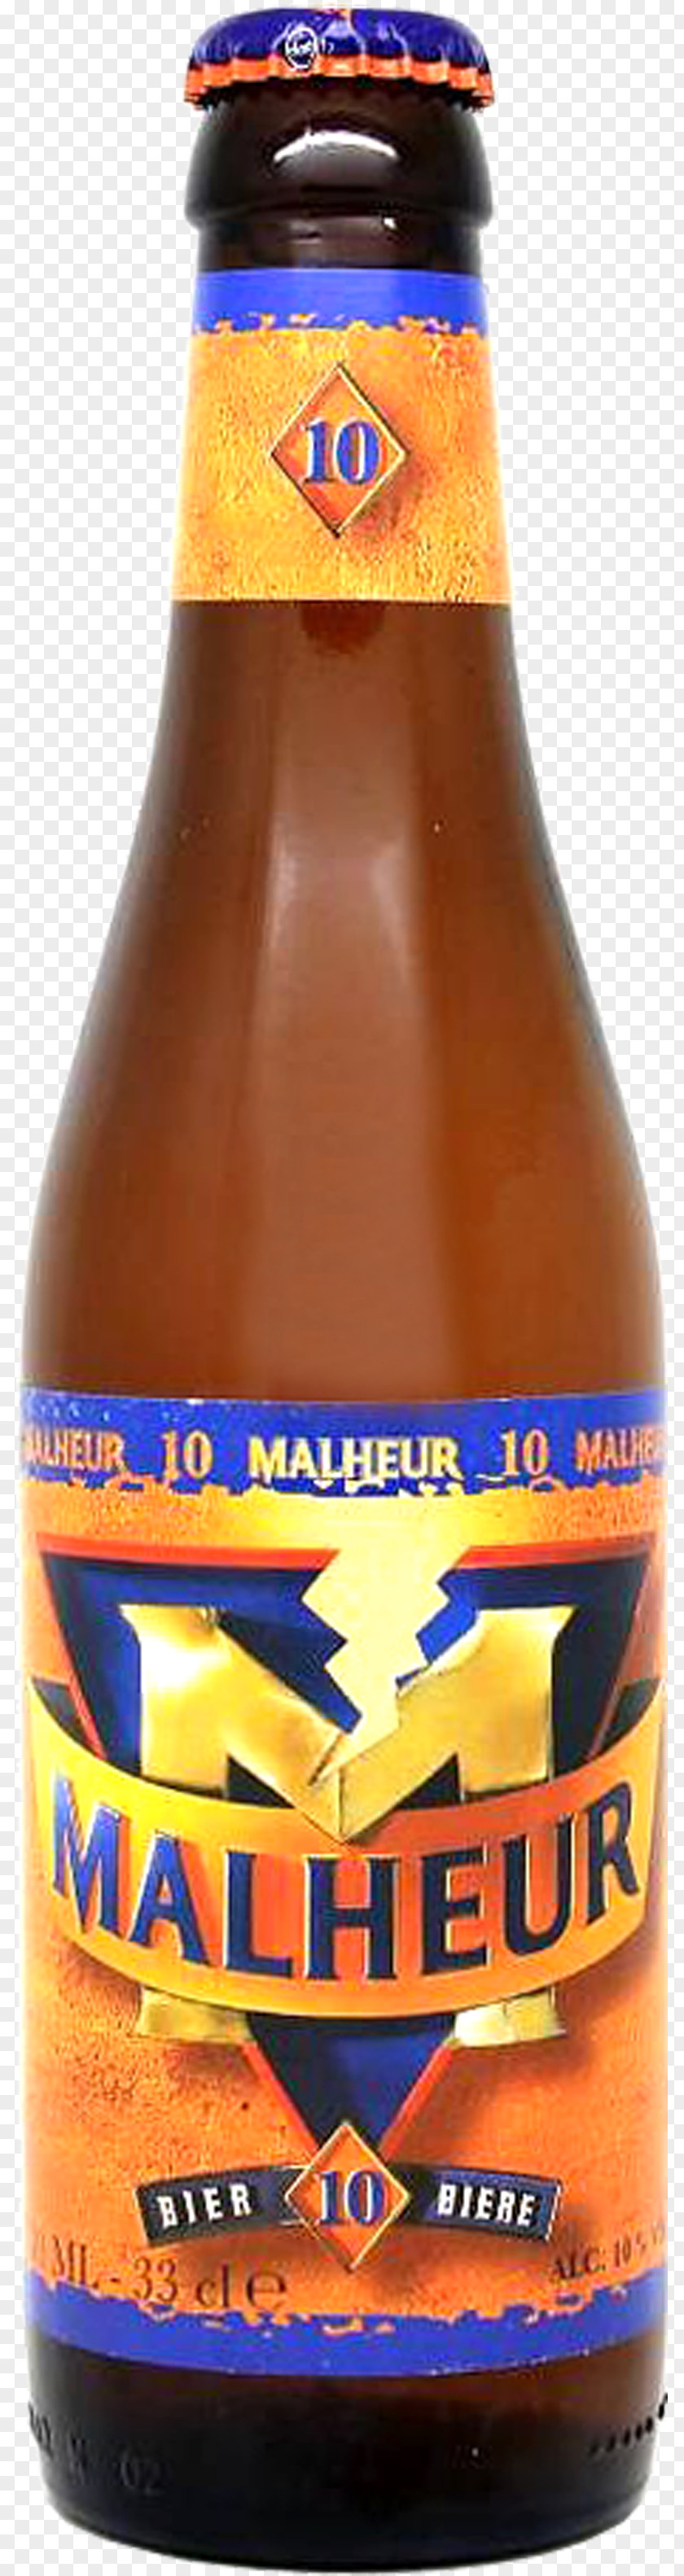 Beer Brasserie De Landtsheer Ale Belgian Cuisine Malheur 10 PNG